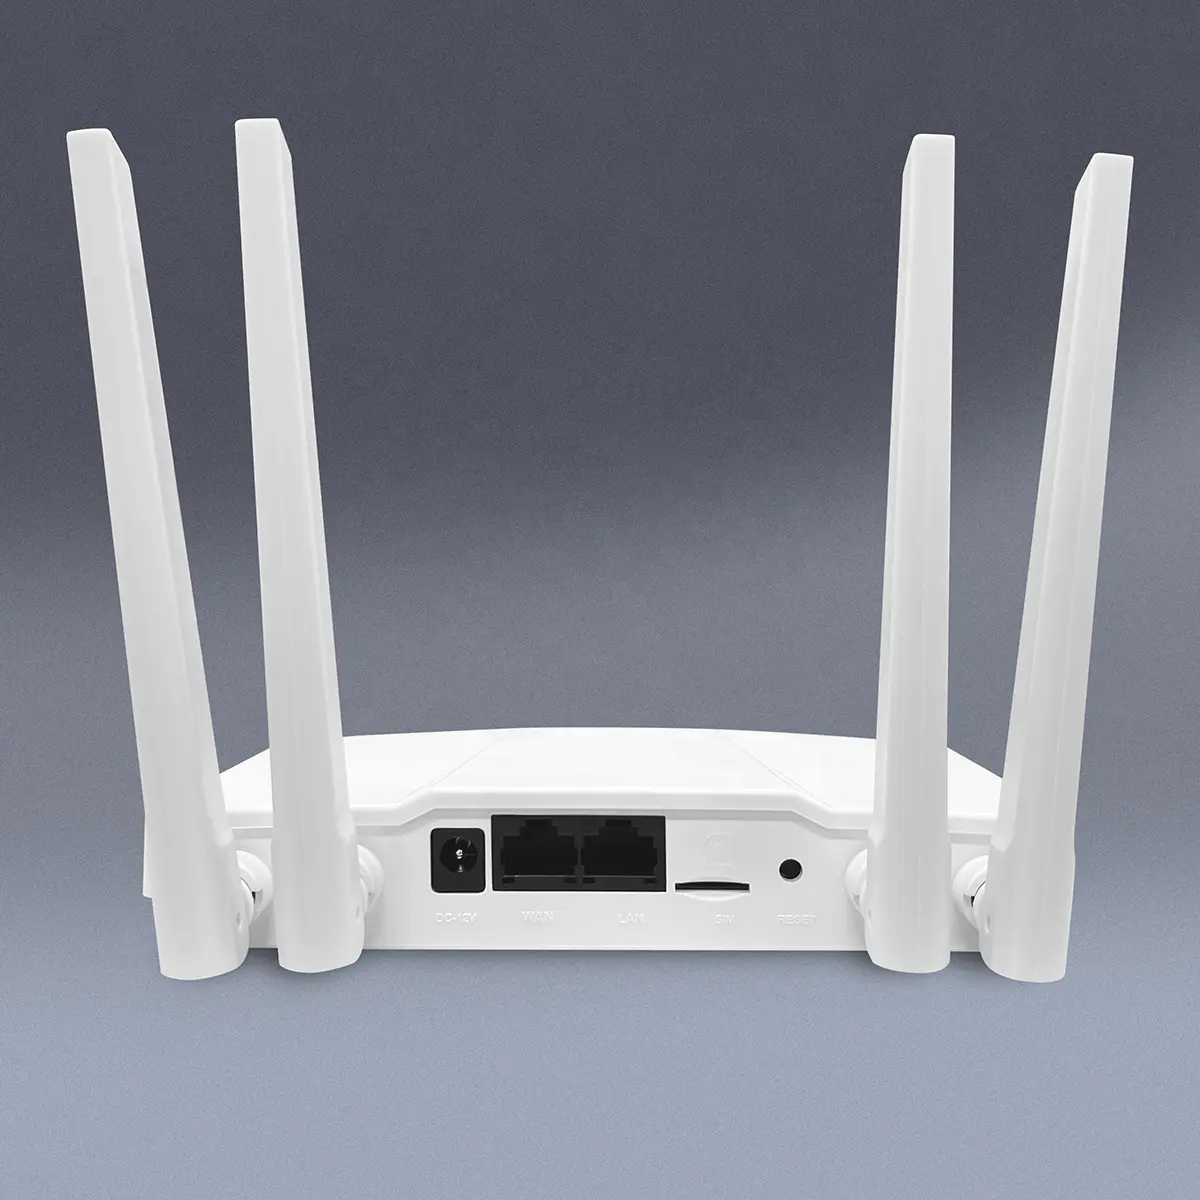 LTE CPE Router 4G Tarjeta SIM Mini WiFi 4G Router Routers WiFi con ranura SIM 4G WiFi Tarjeta SIM 300M